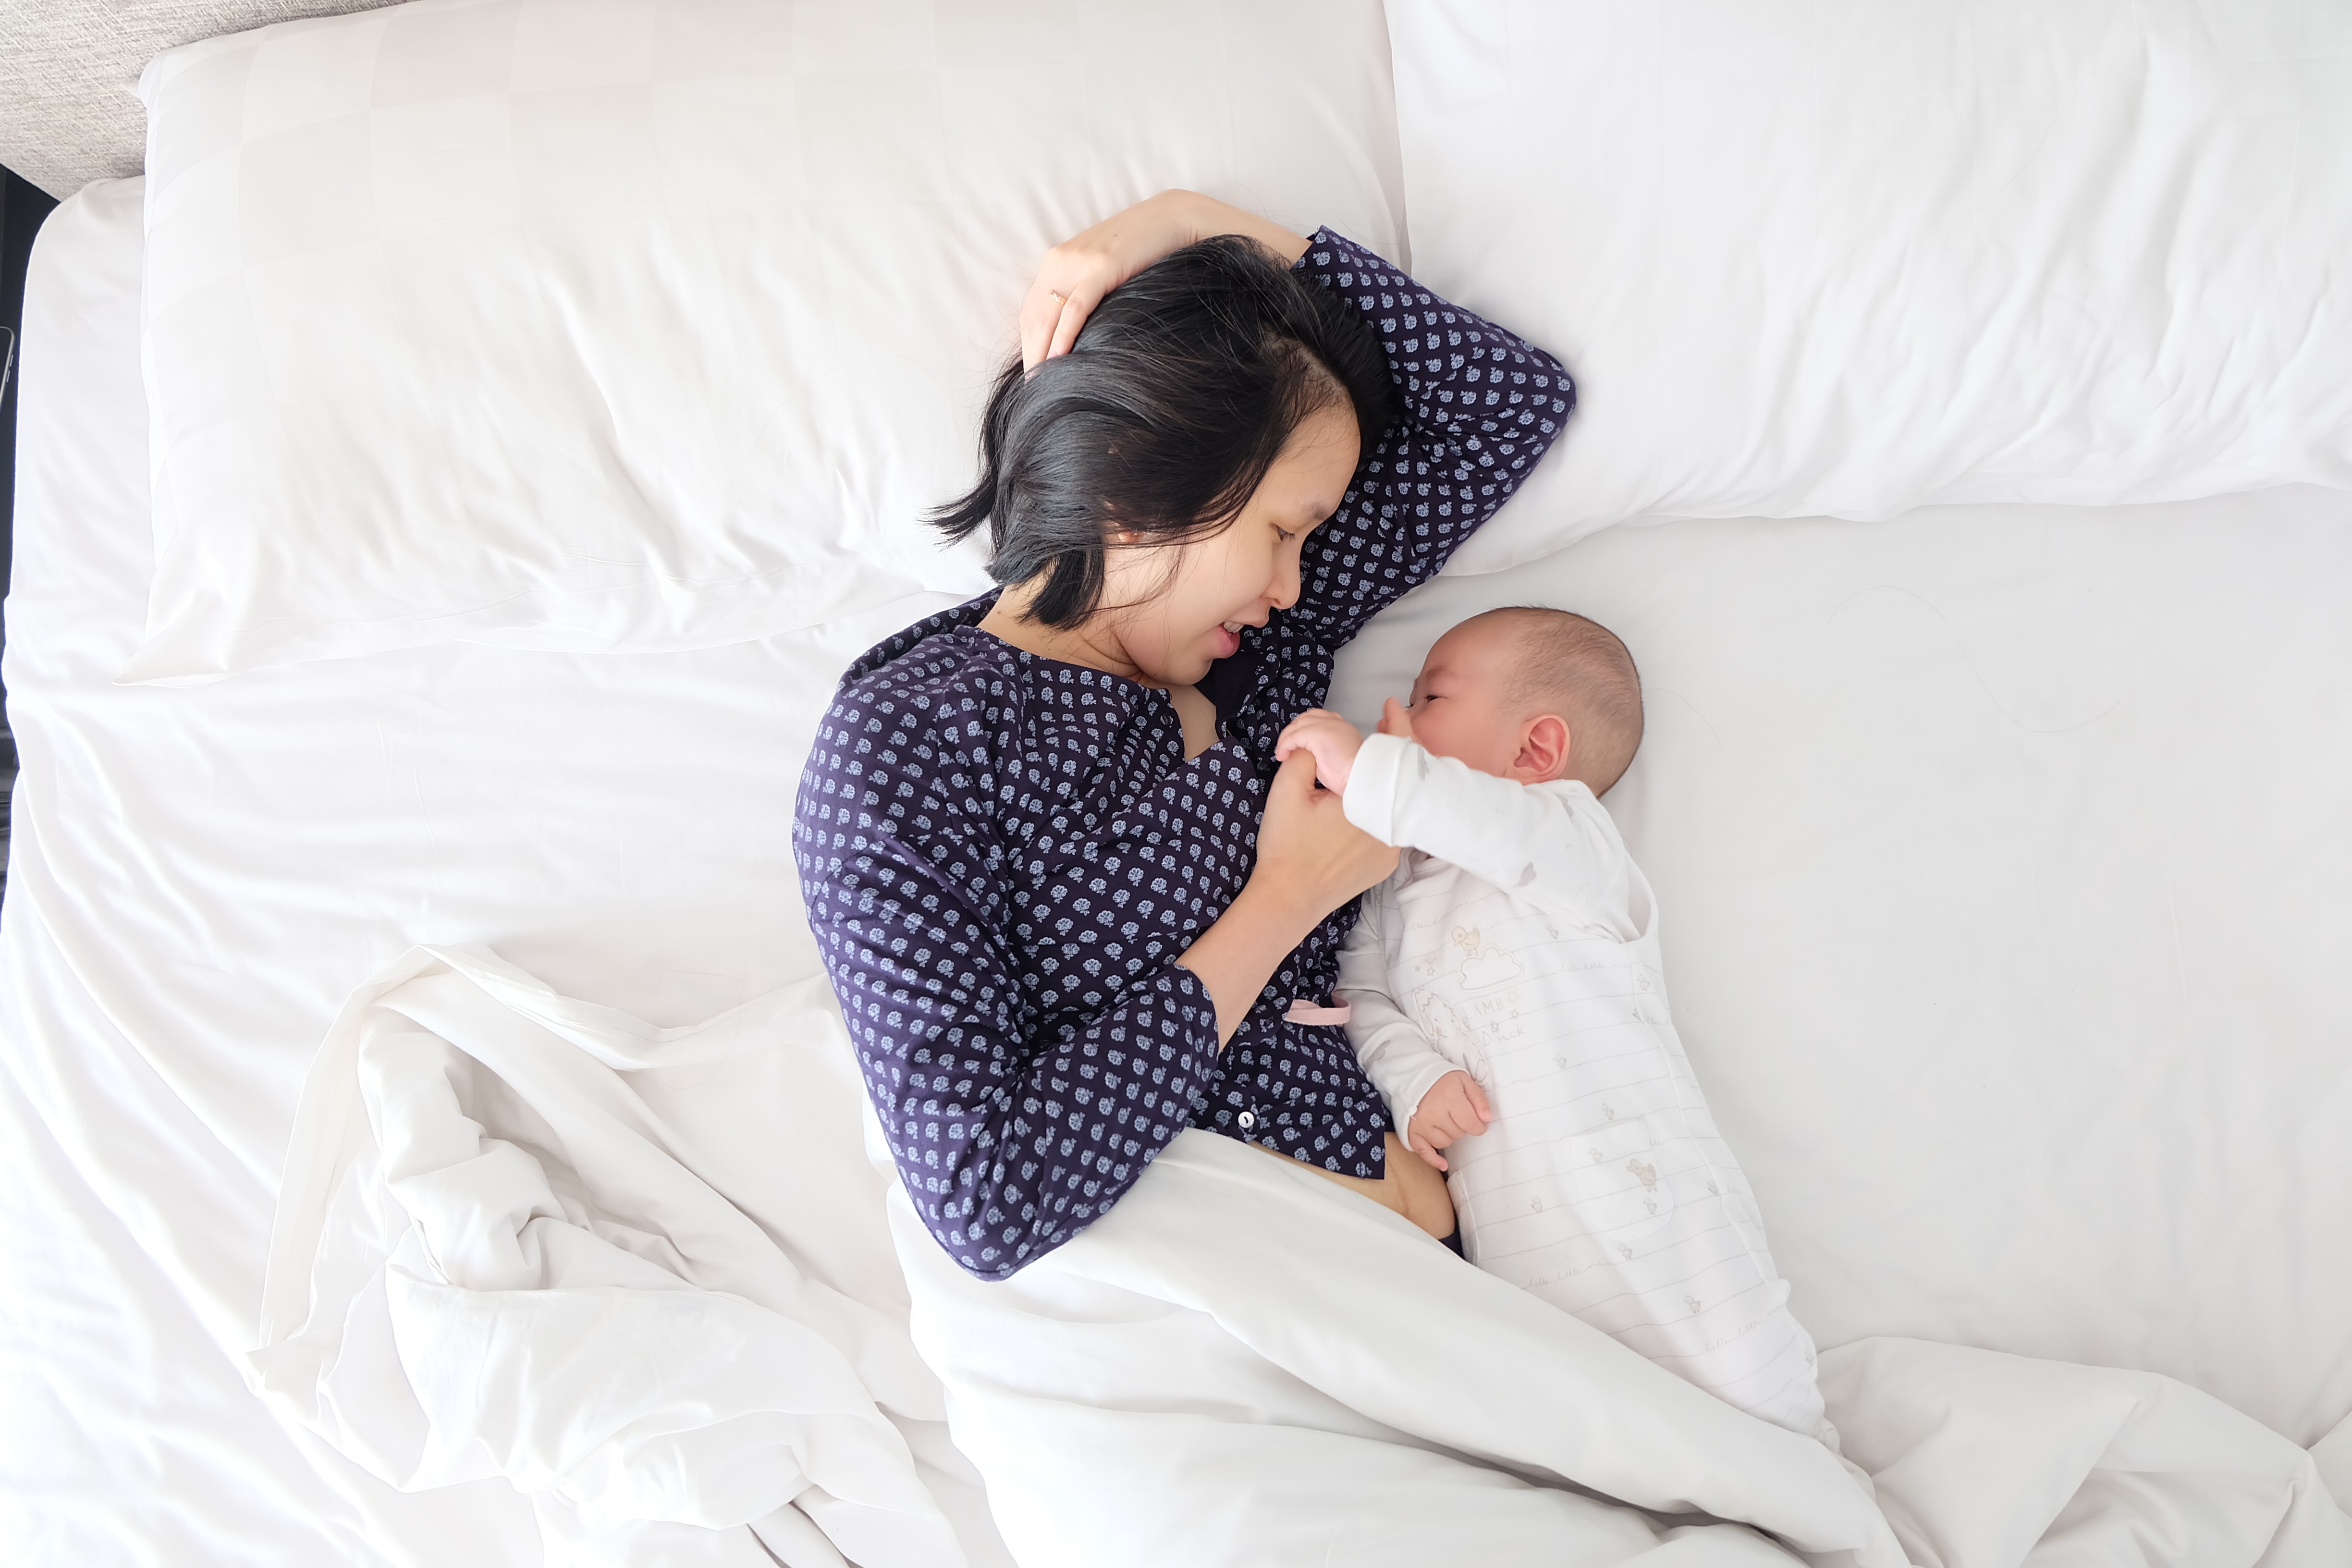 Why Breastfeeding Grief and Trauma Matter